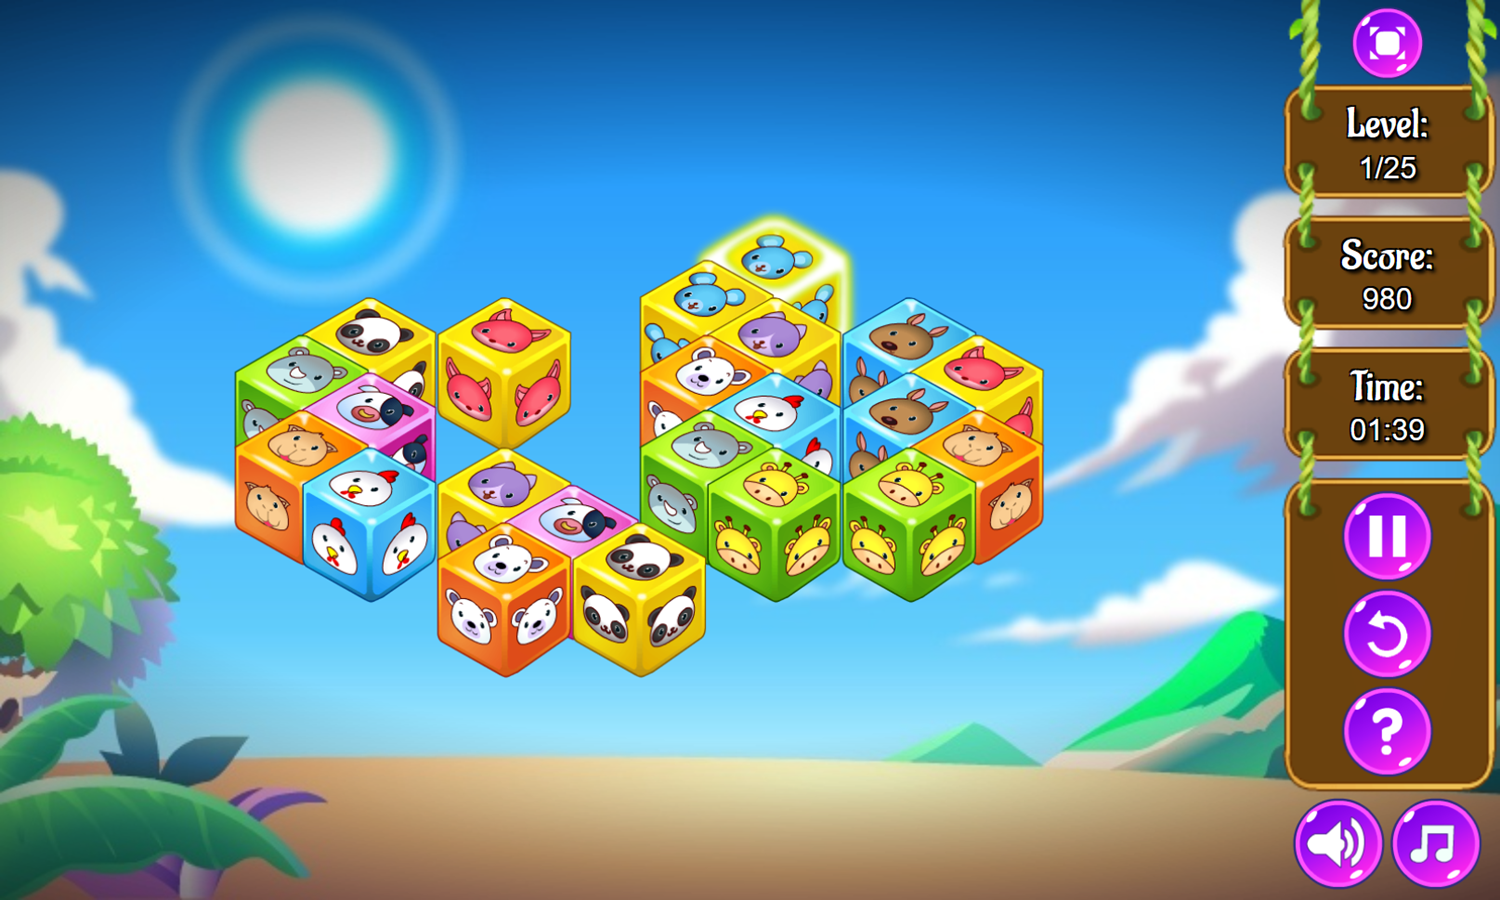 Cube Zoobies Game Level Play Screenshot.